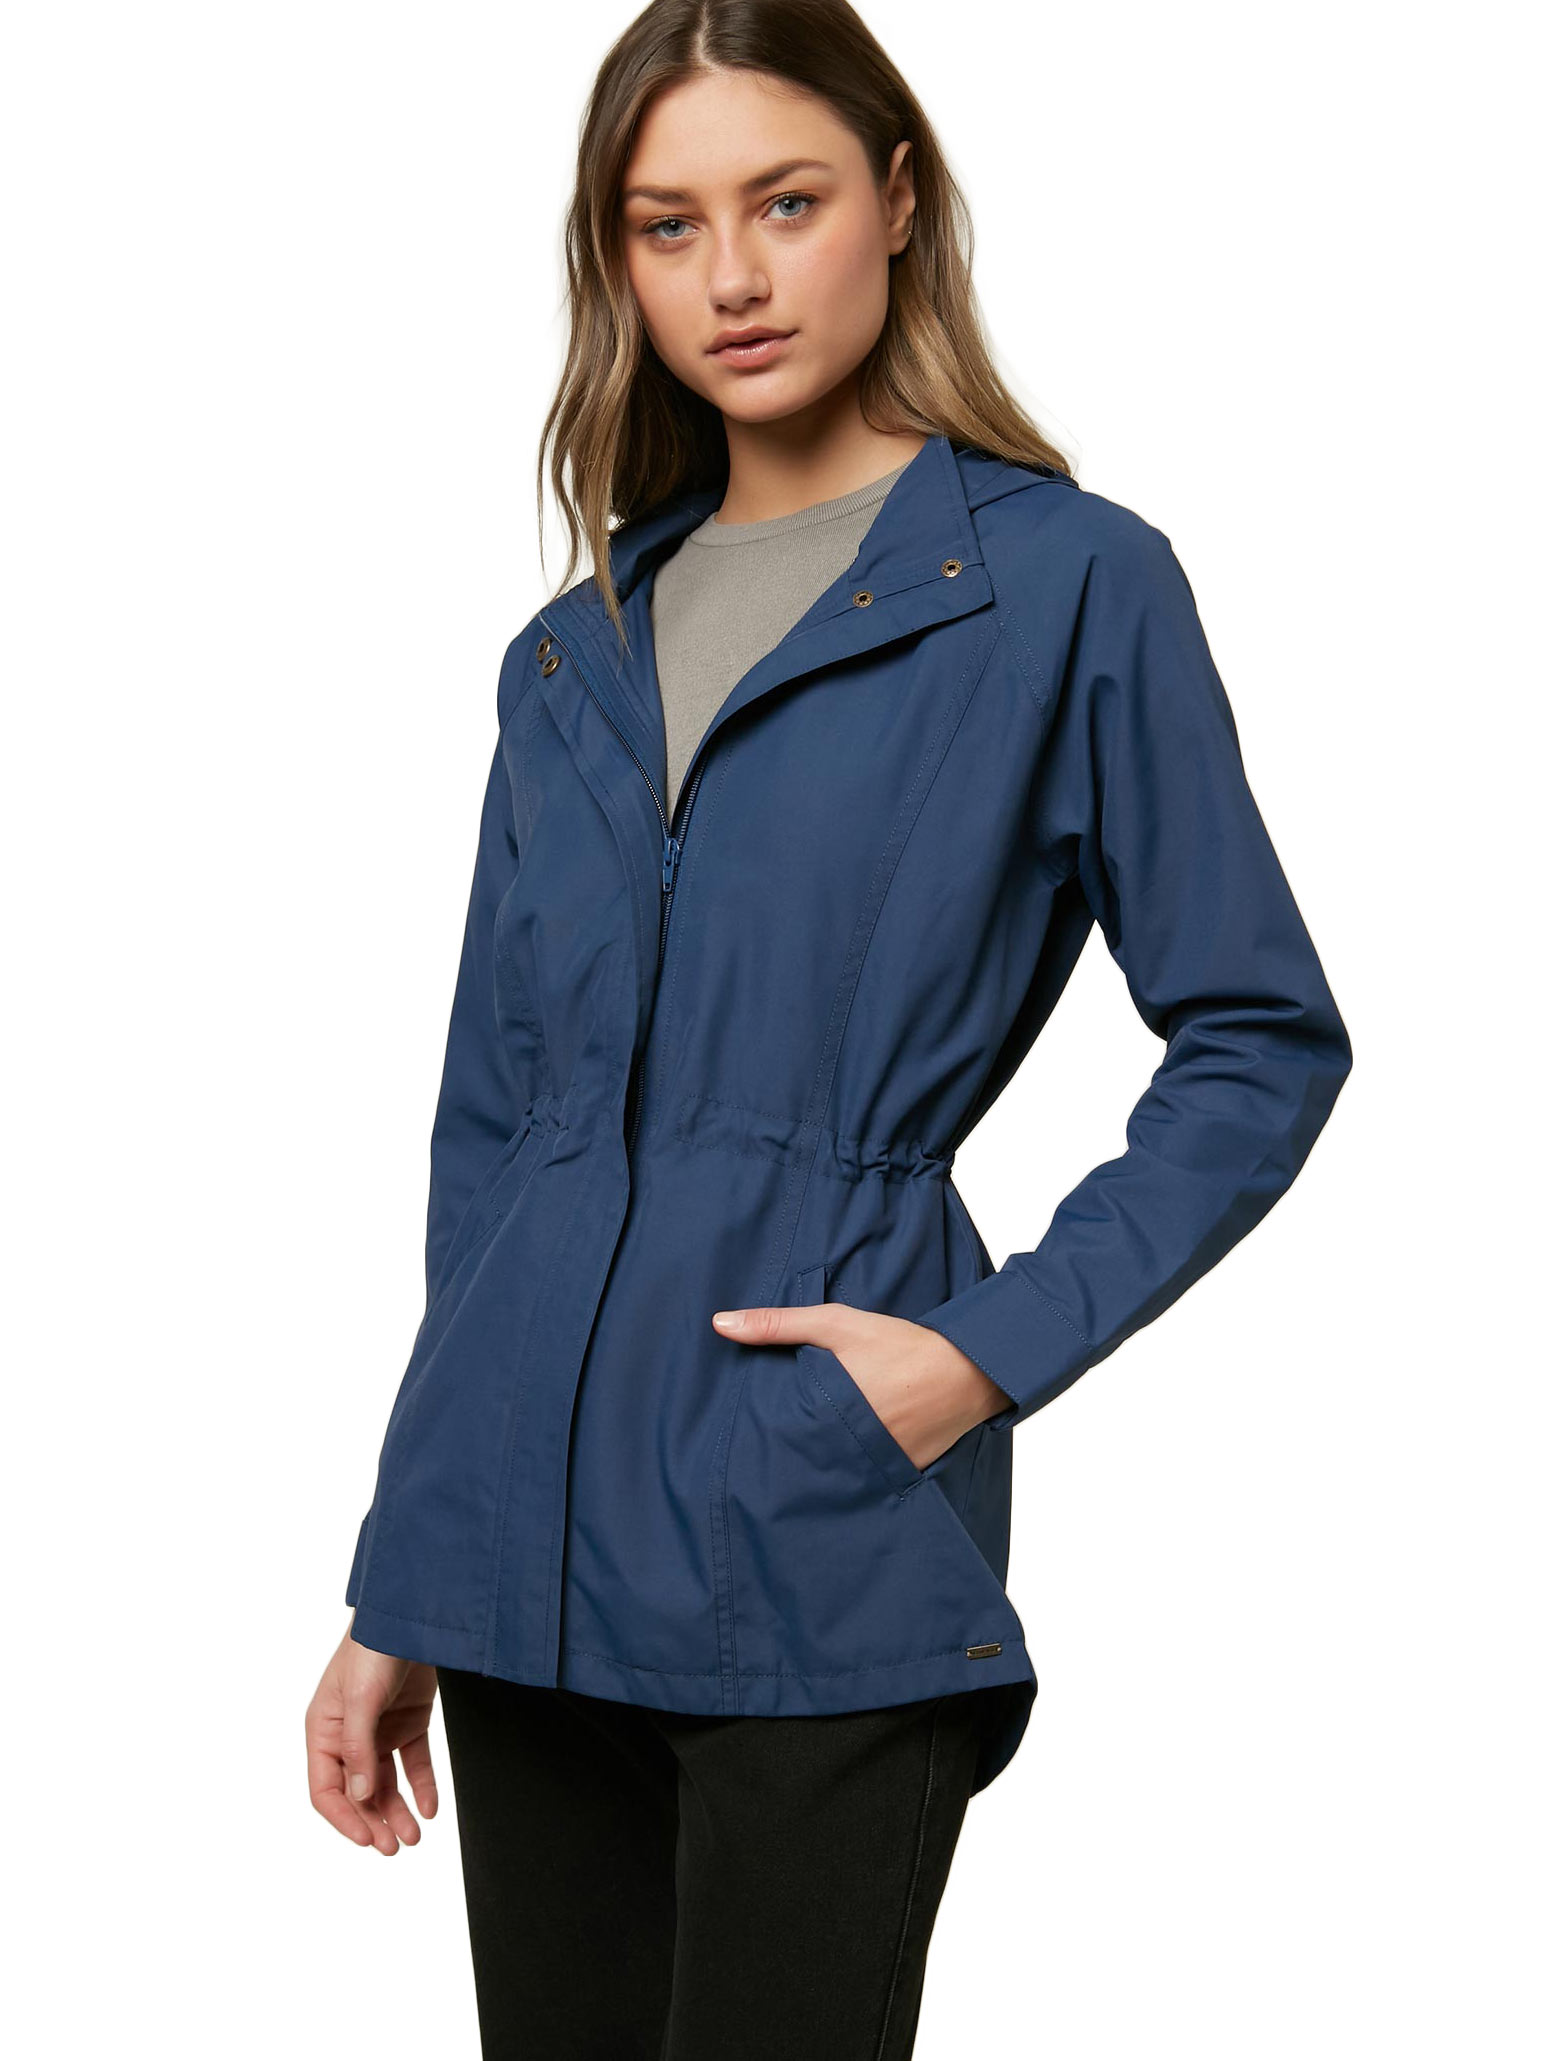 O'Neill Womens Gayle Rain Jacket Insignia blue M - image 2 of 4